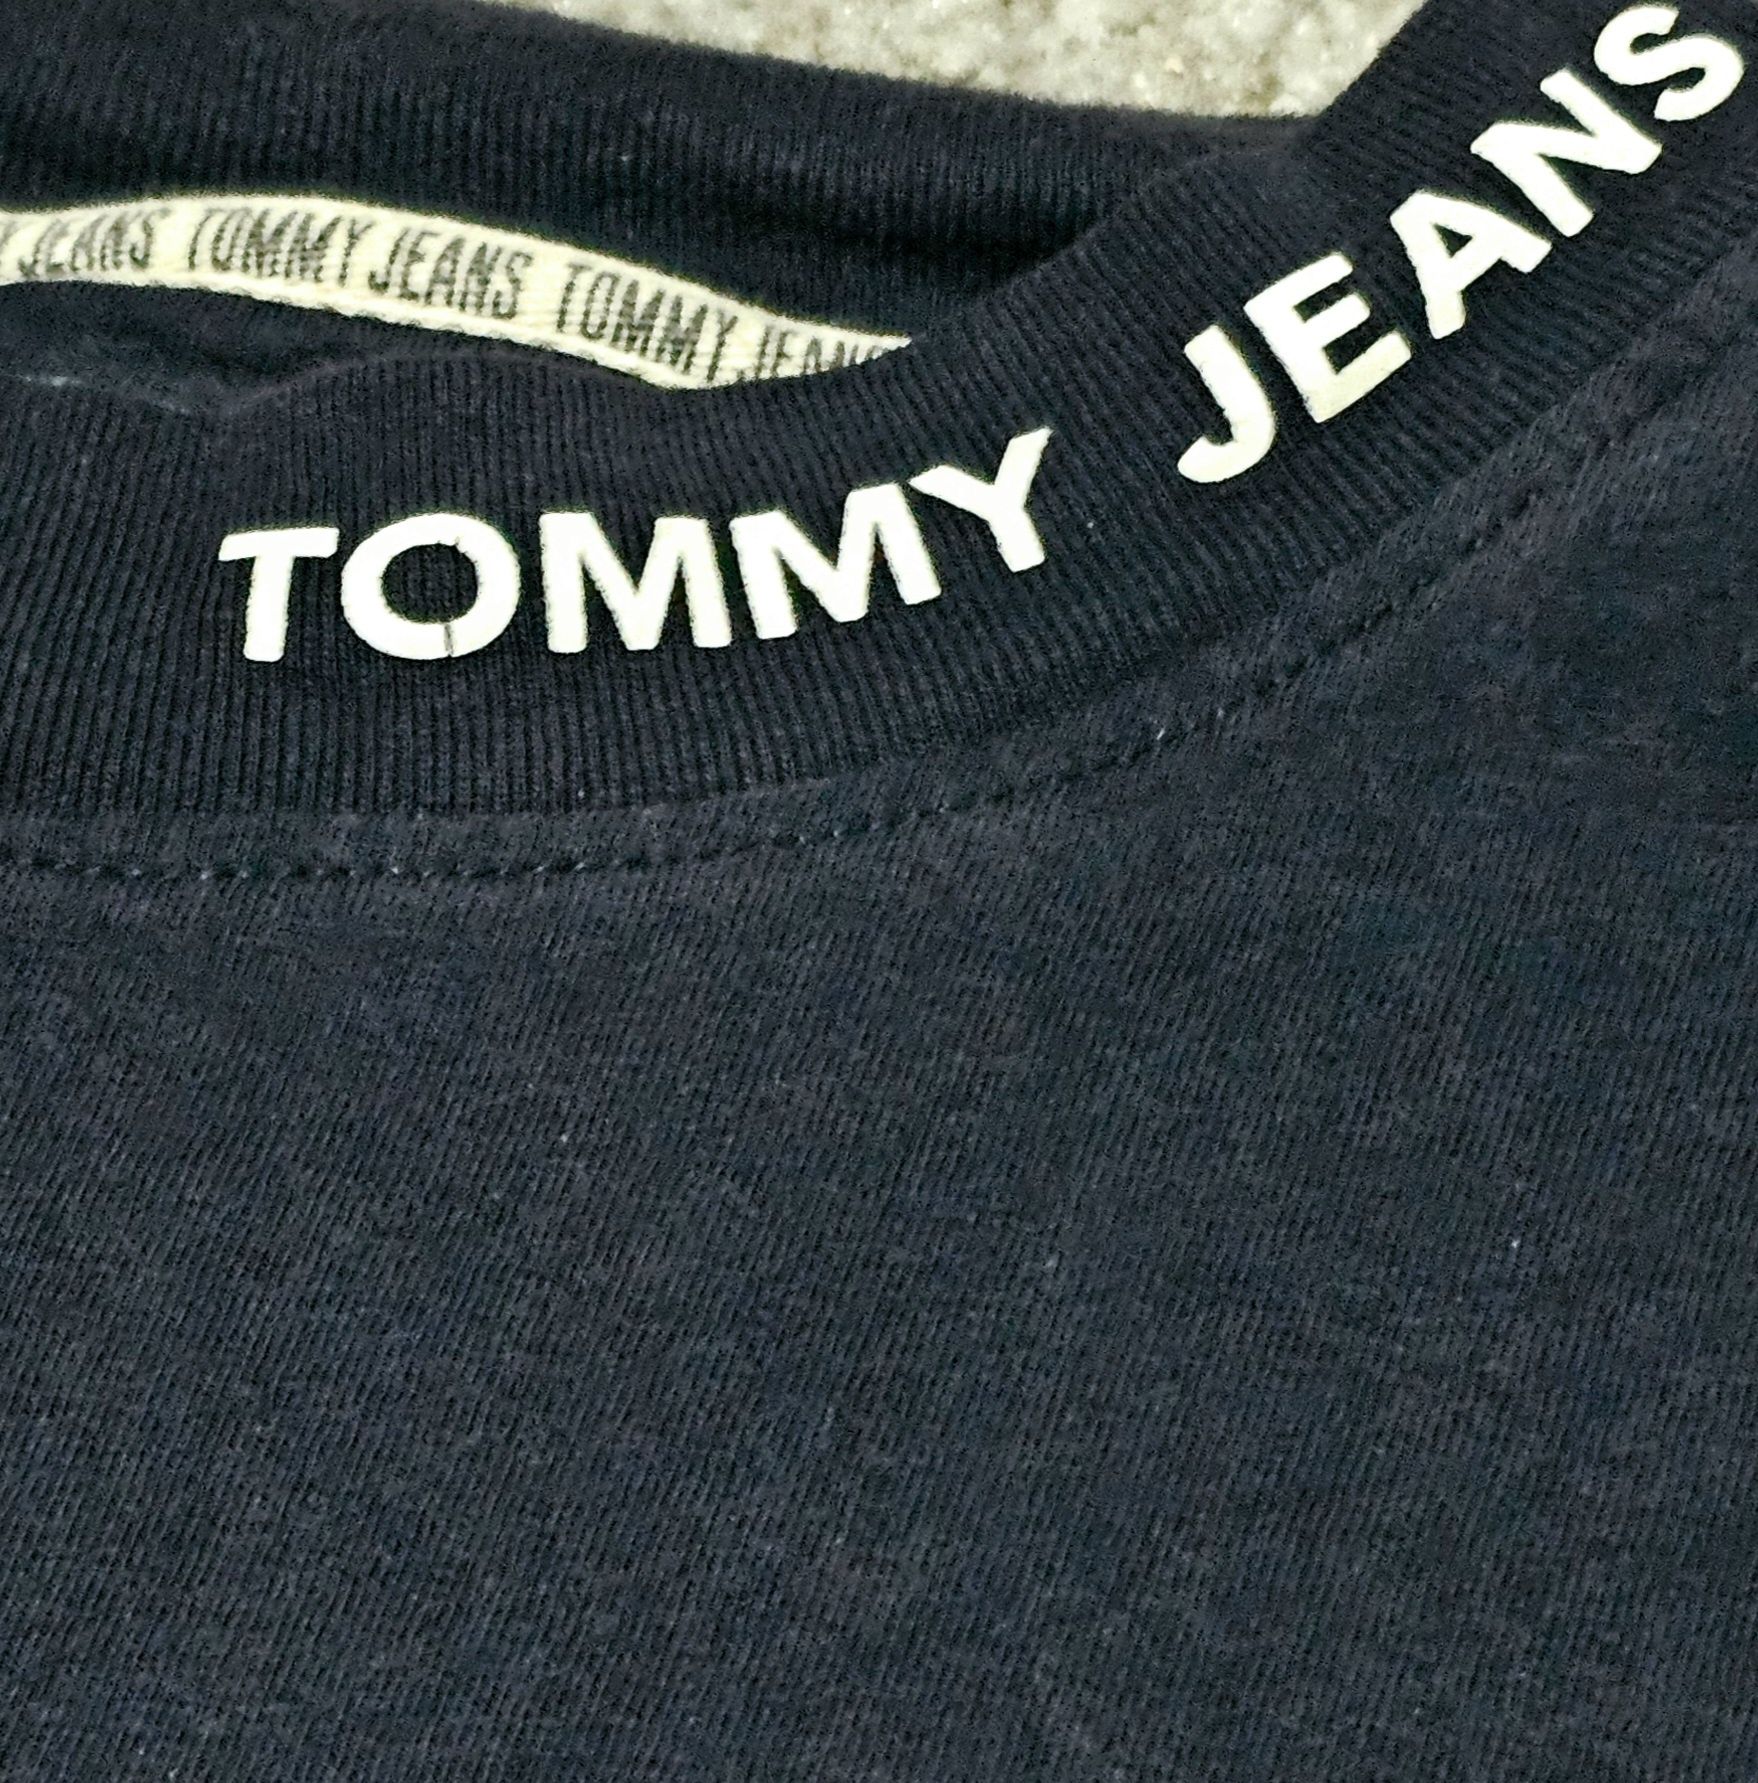 Tricou barbati Tommy Jeans
Marime L
100% bumbac